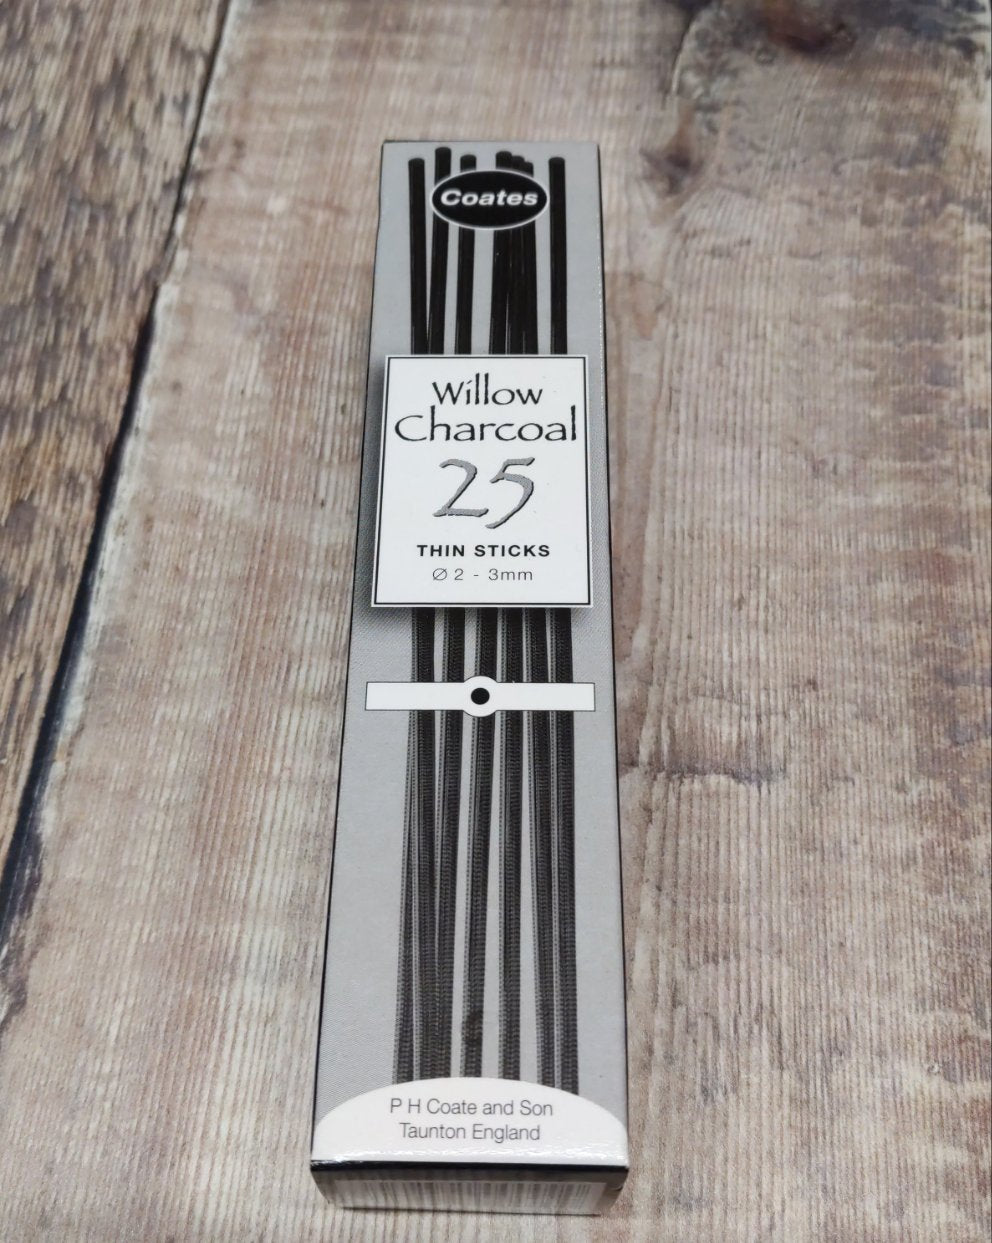 Coates Willow Charcoal Thin sticks x 25